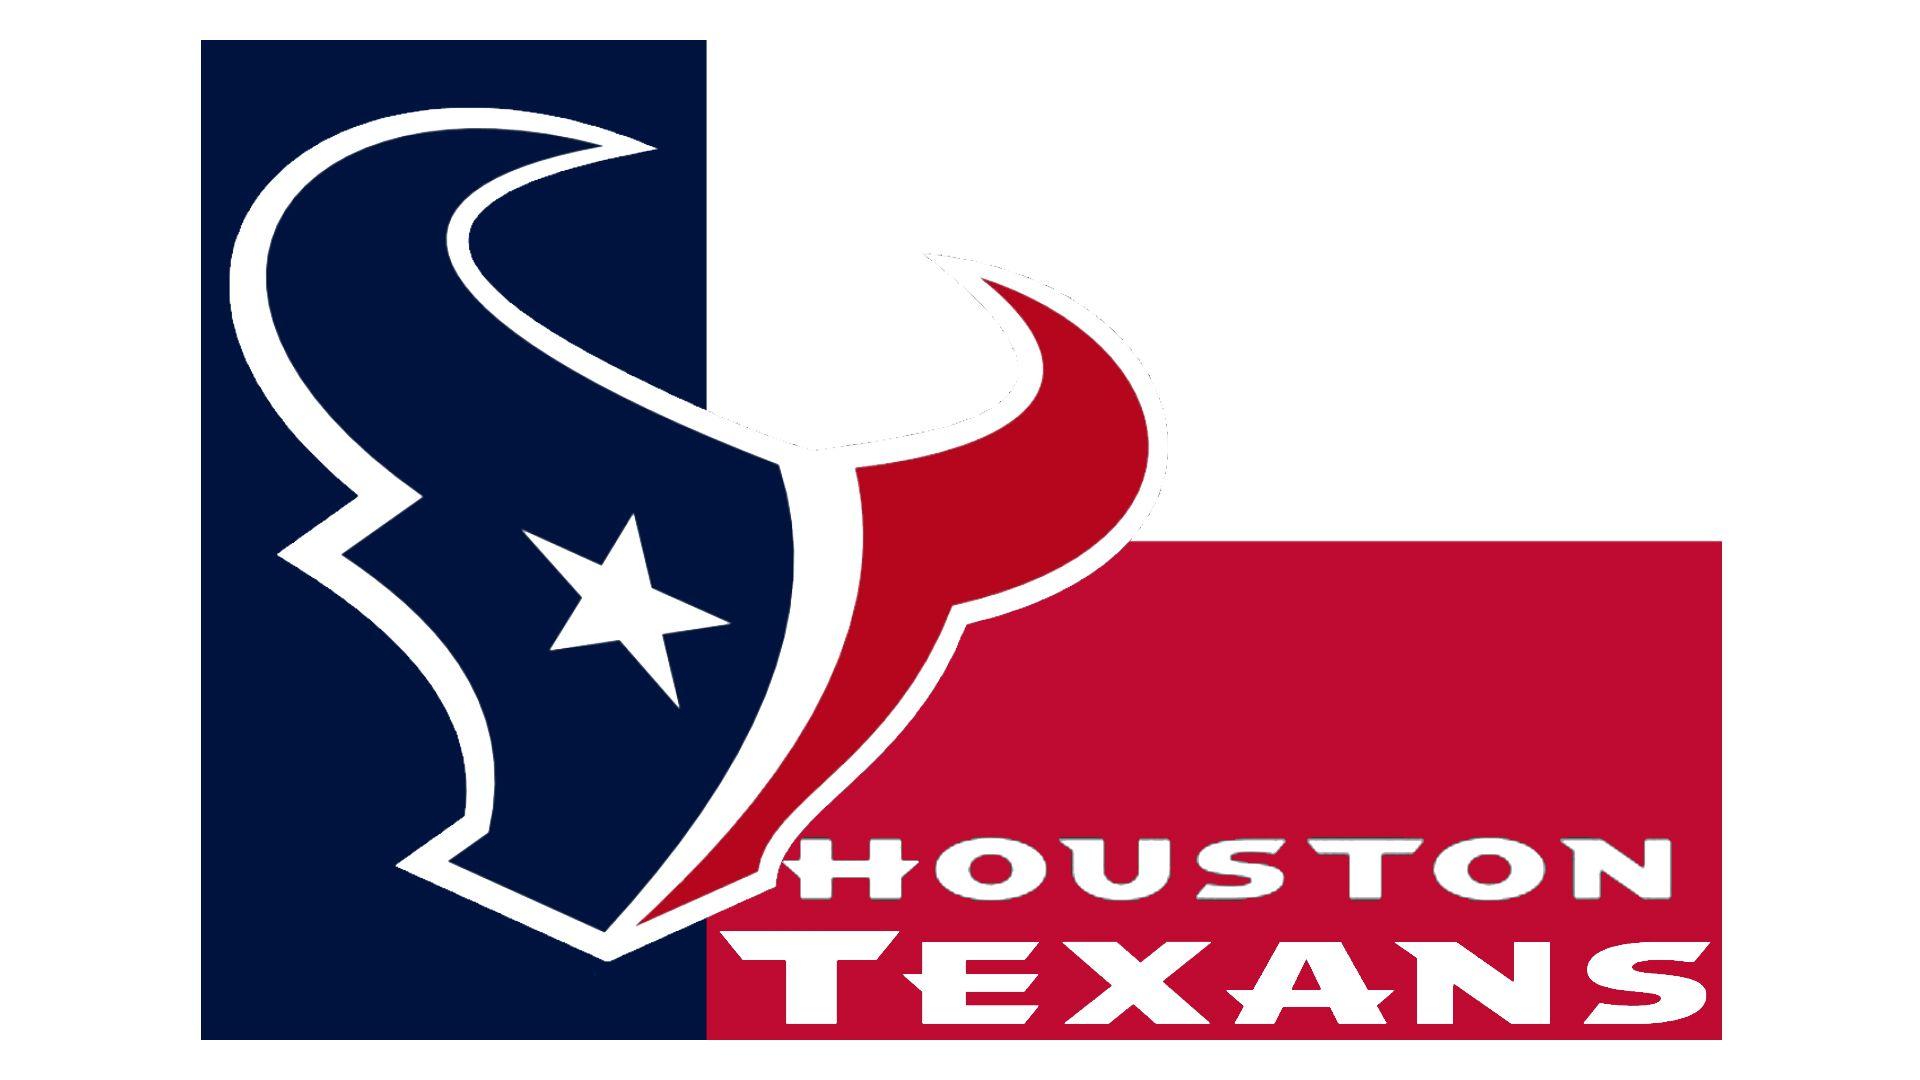 NFL Texans Logo - Texans Logo, Texans Symbol, Meaning, History and Evolution